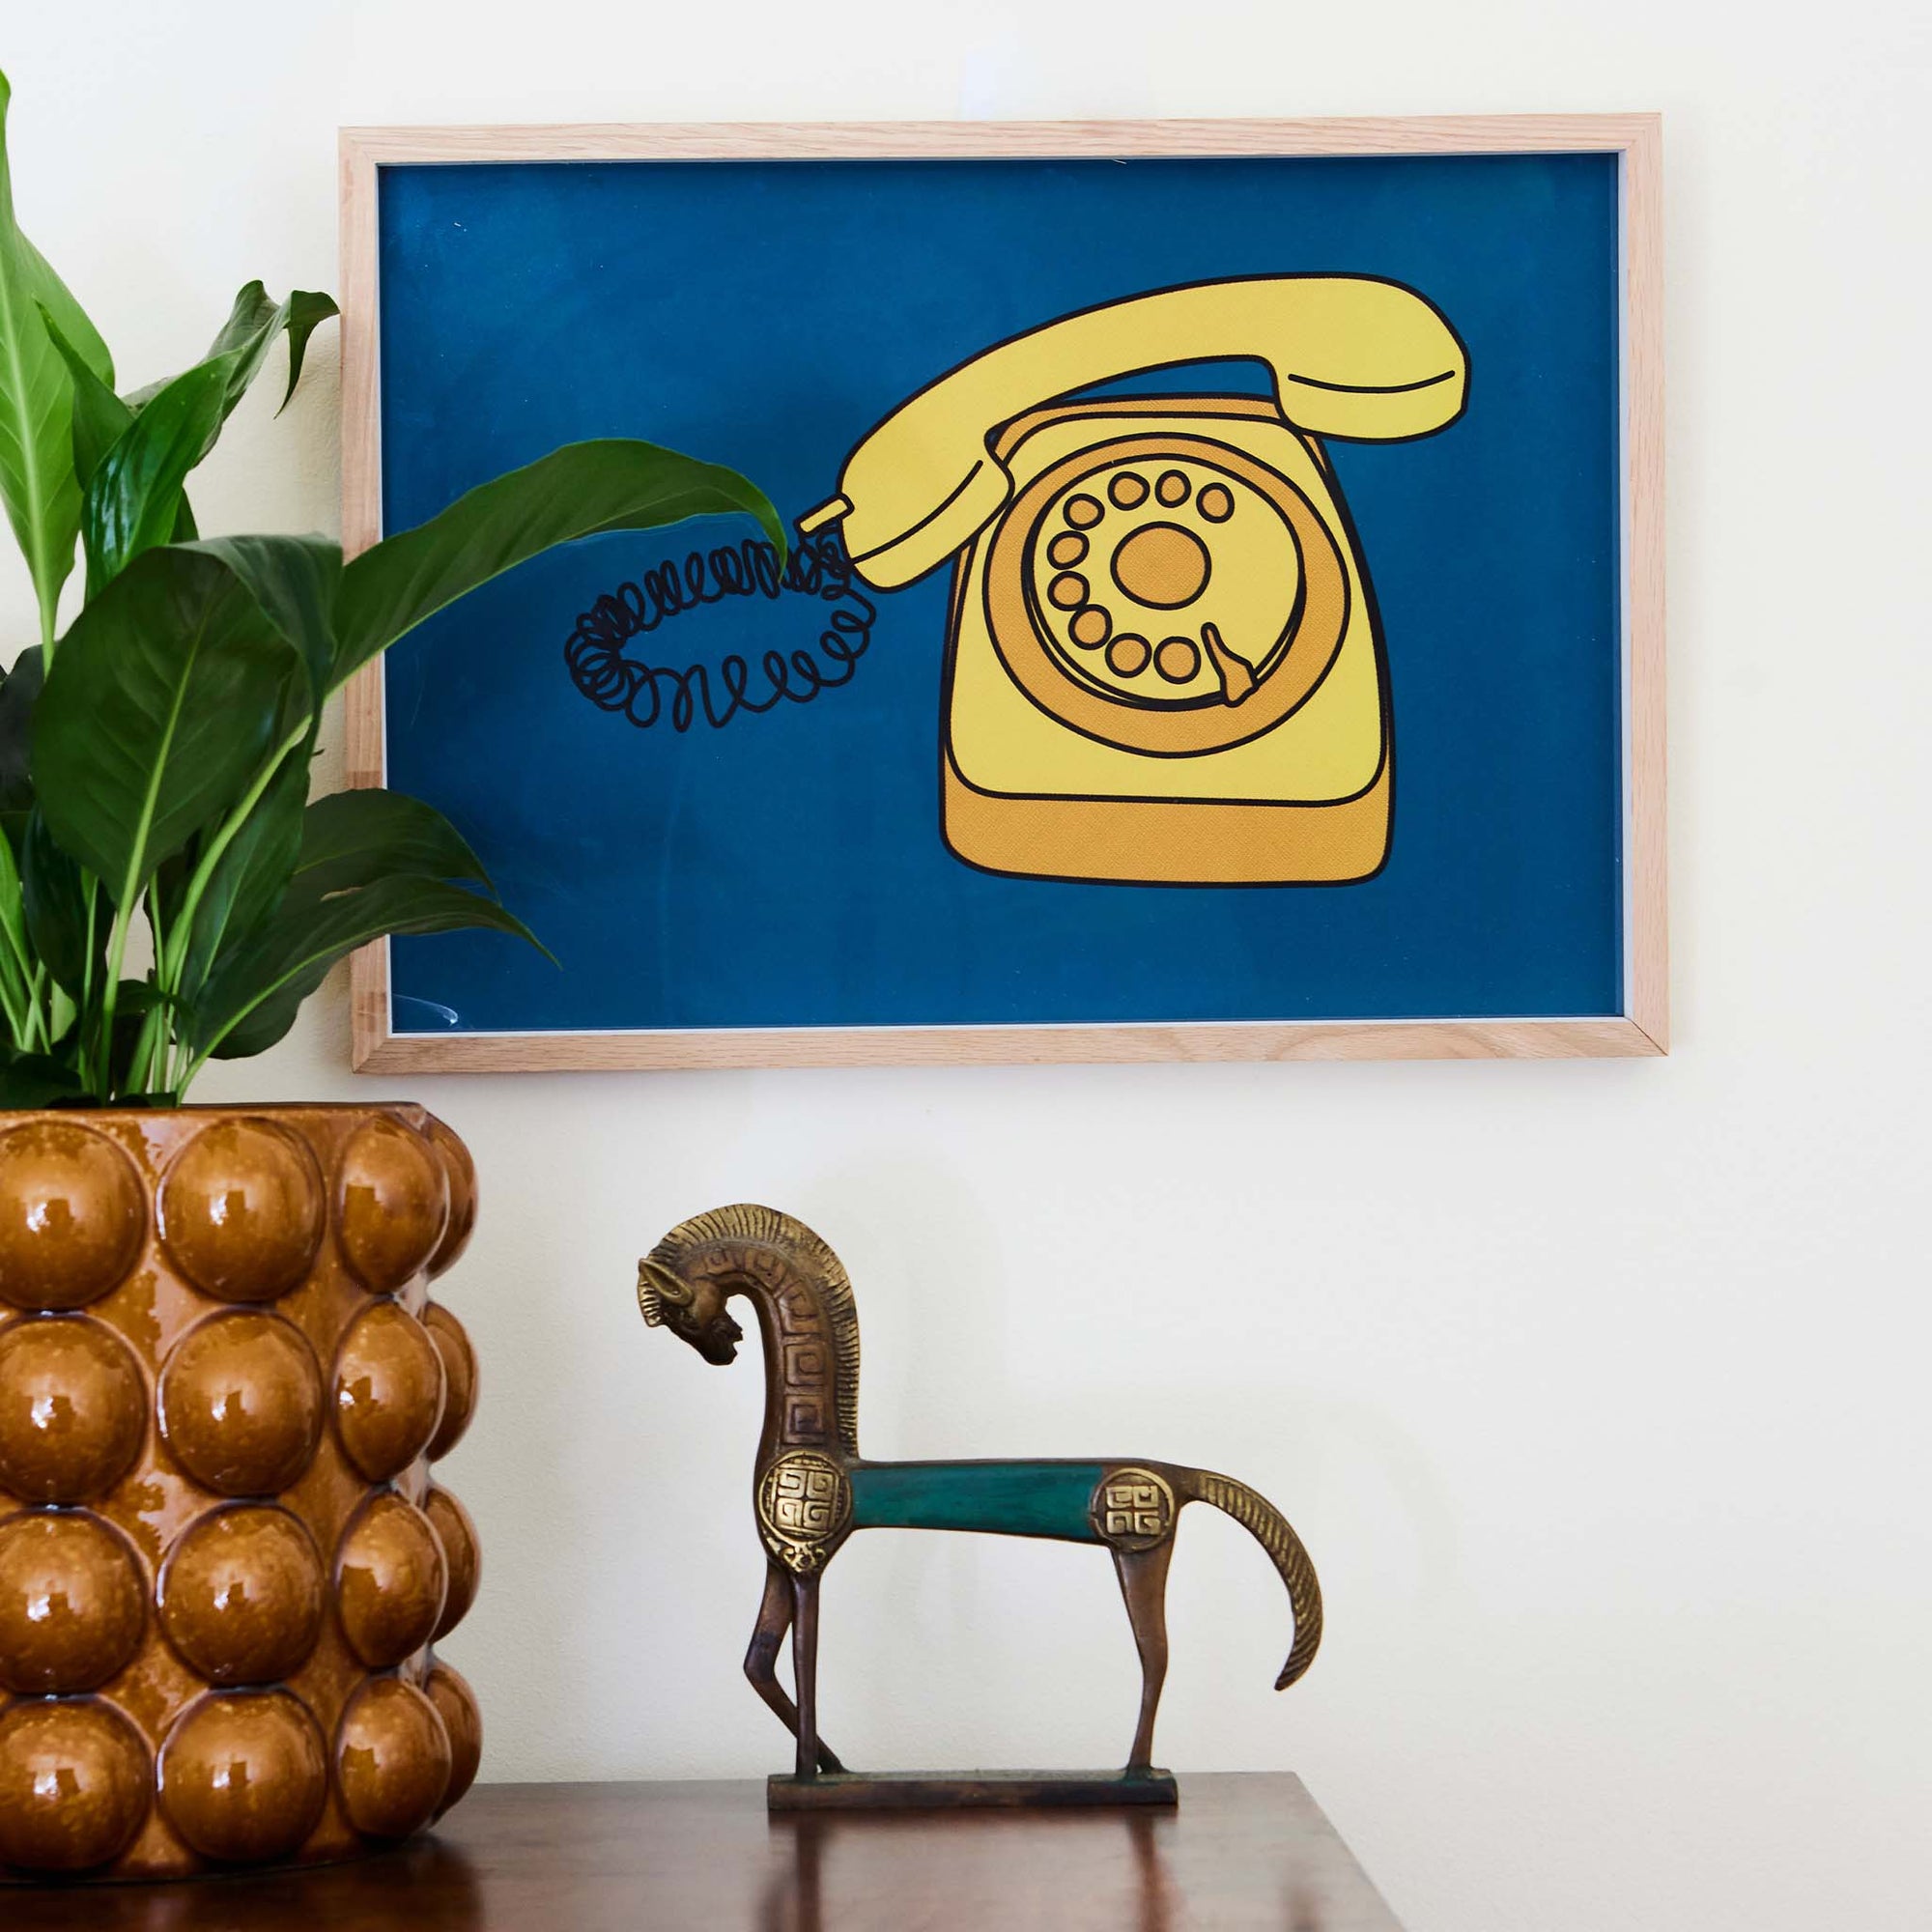 Telephone Art Print